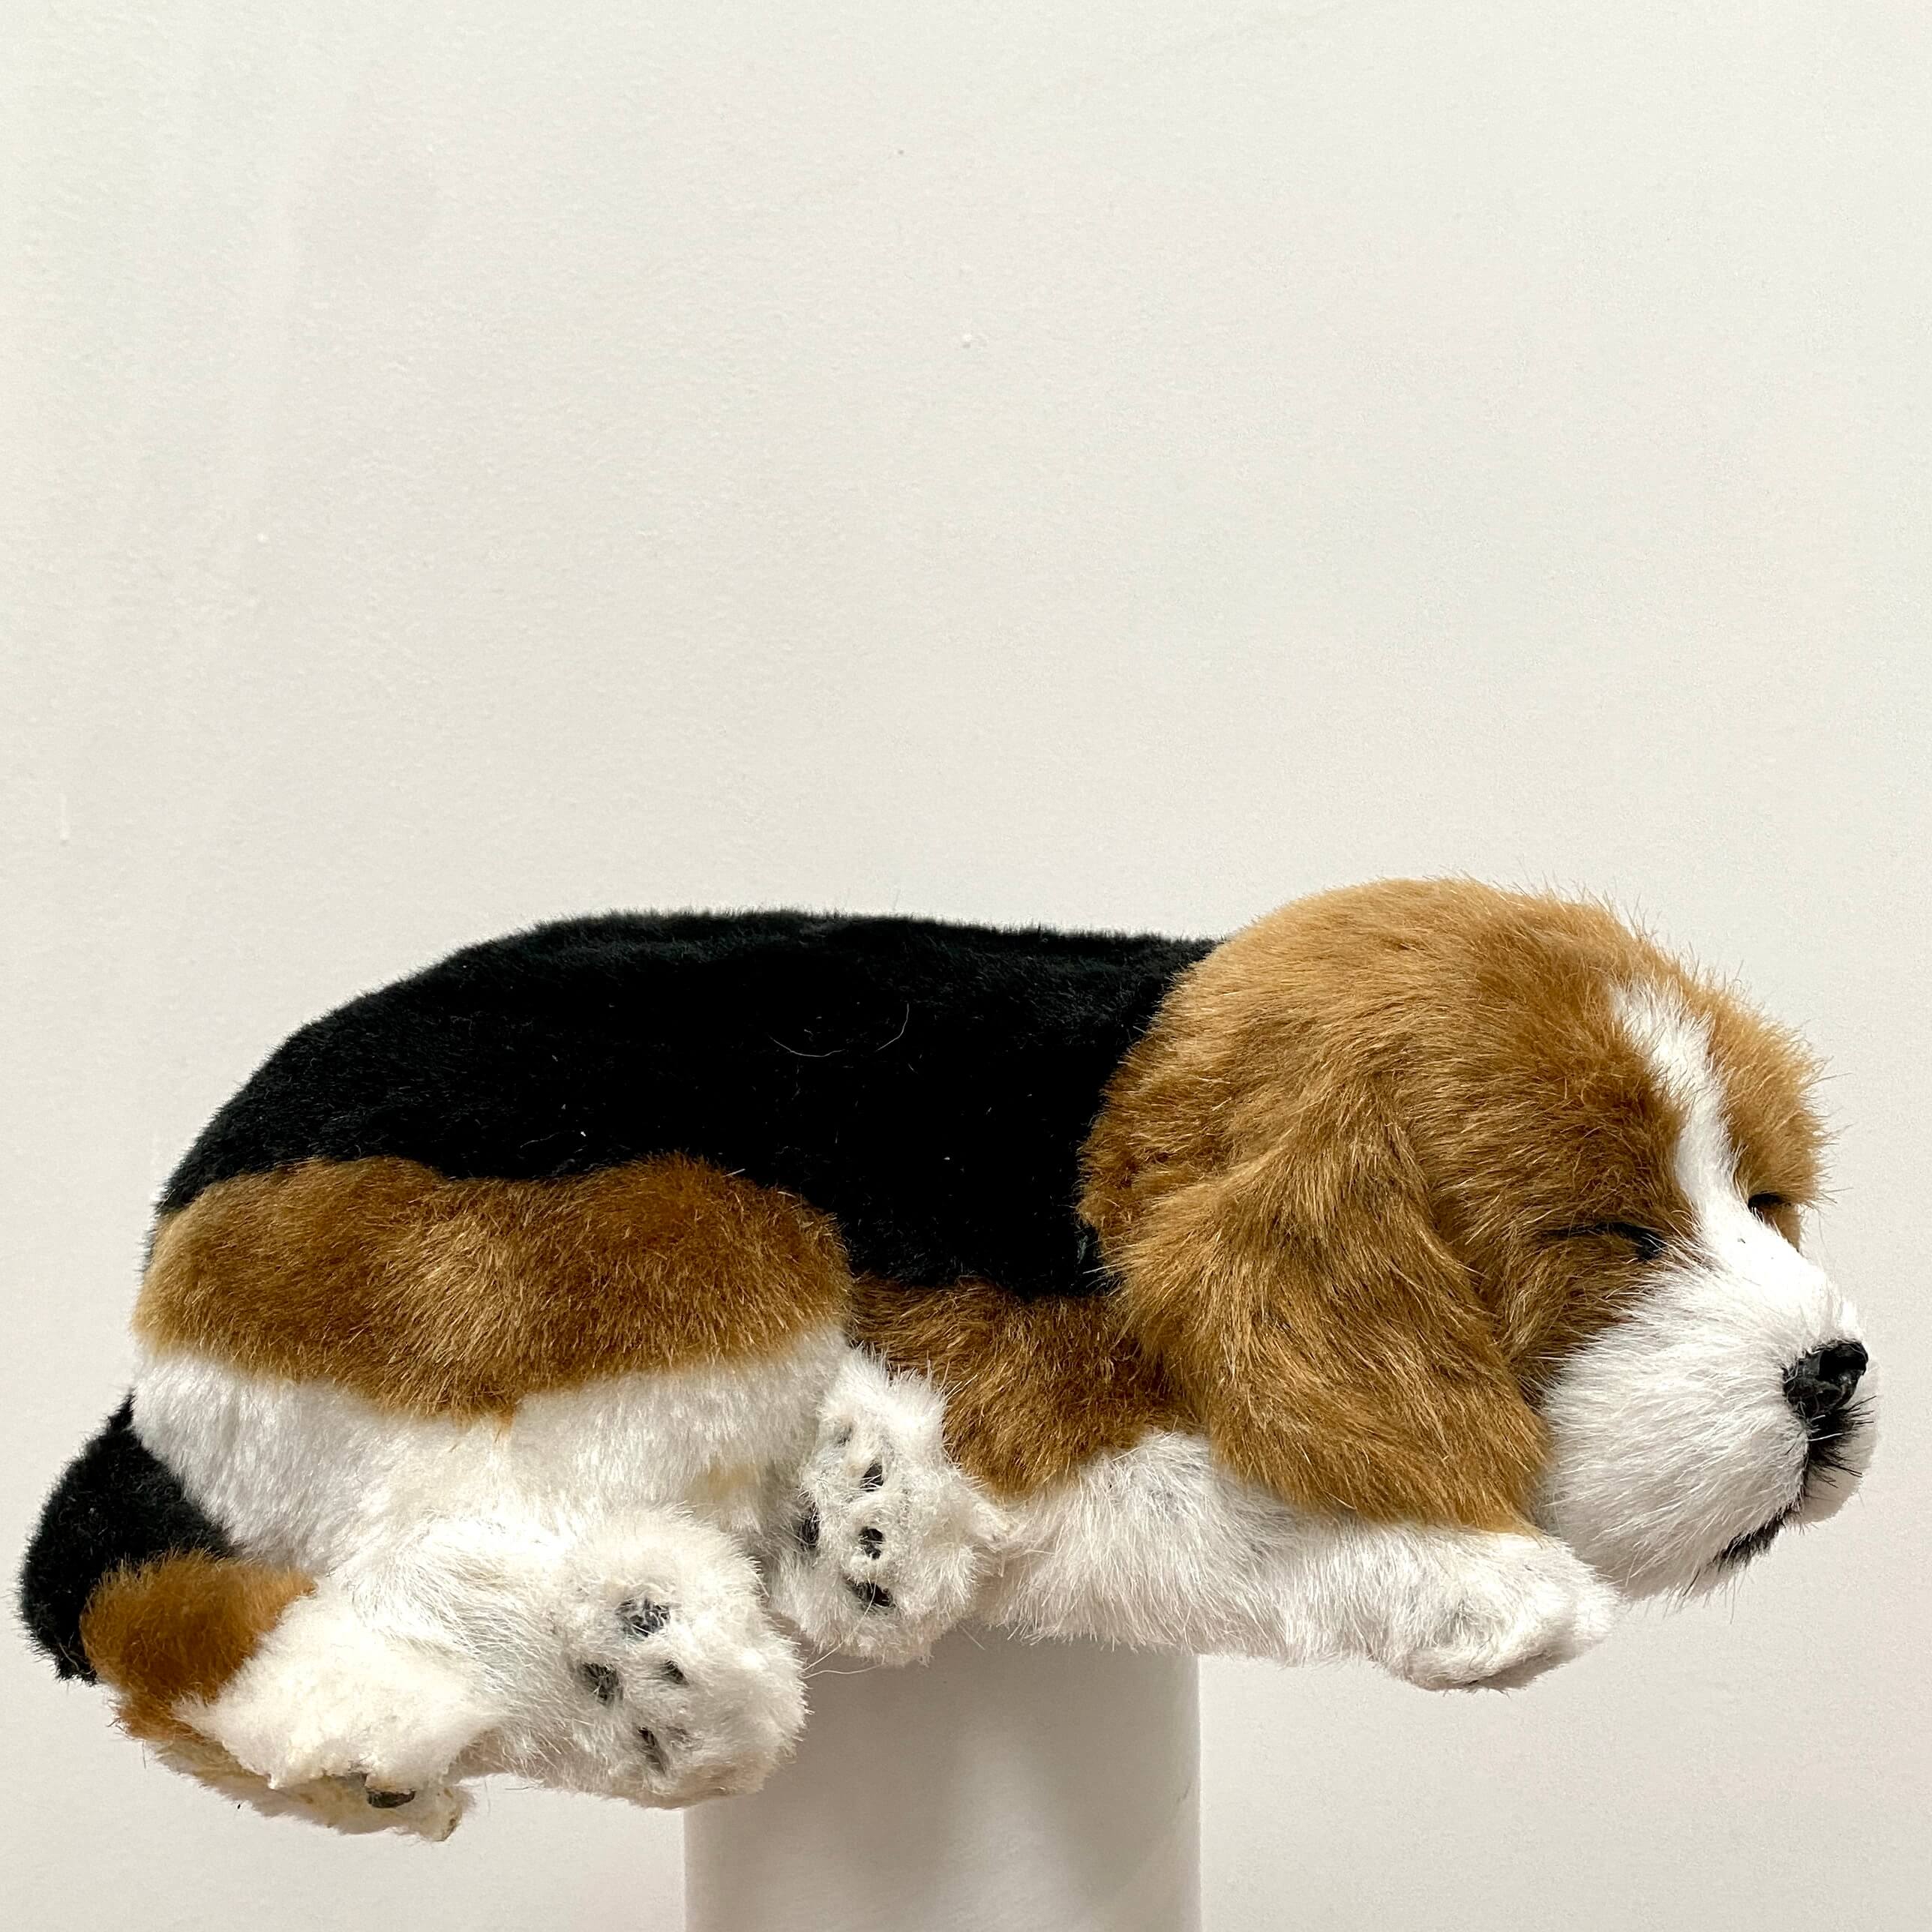 Puppy stuffed animal Toy